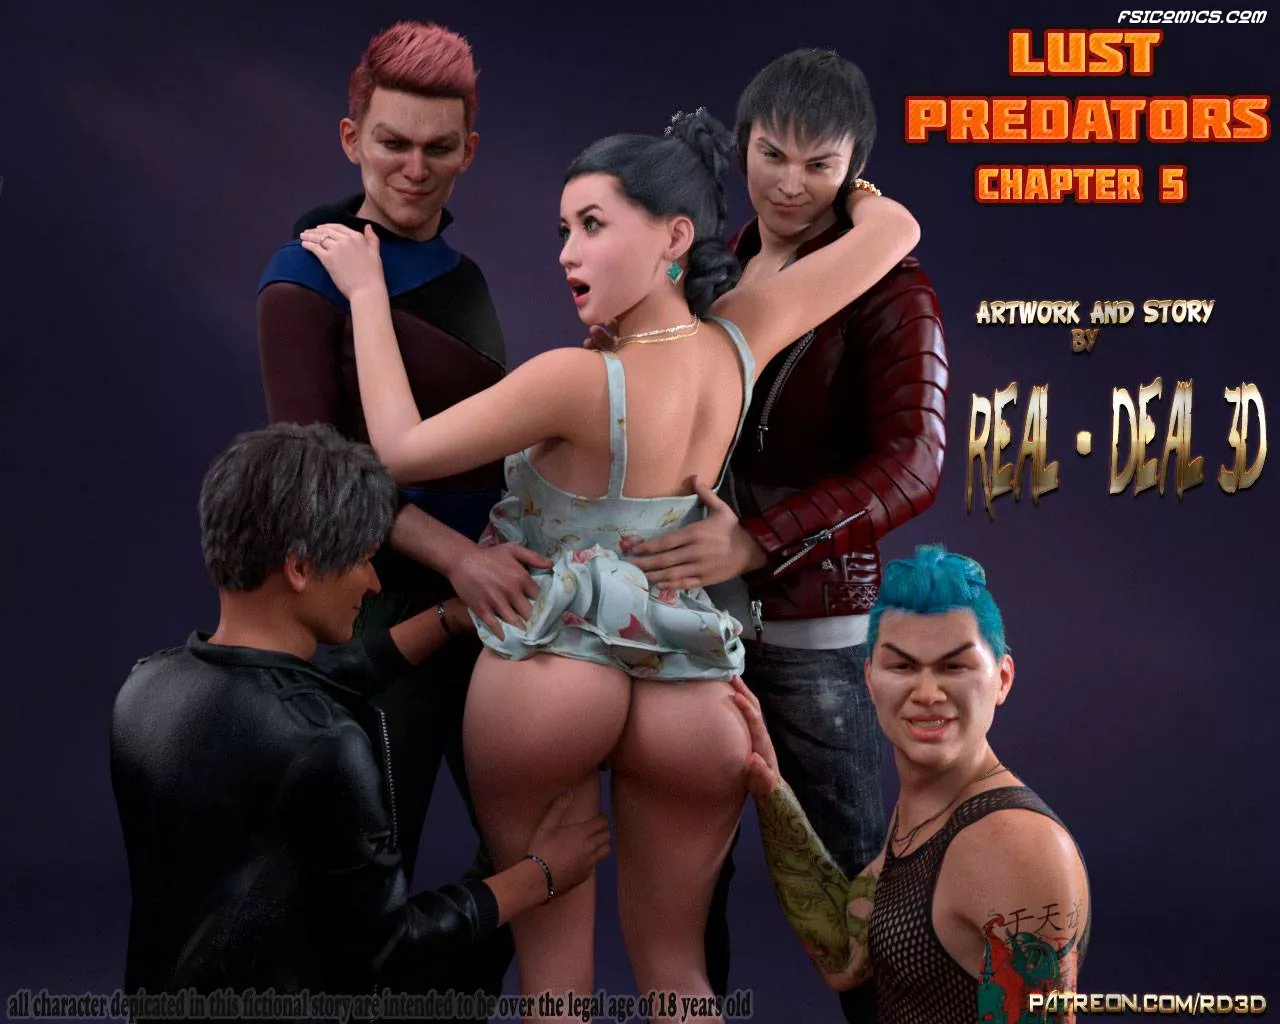 Lust Predators Chapter 5 - Real Deal 3D - 23 - FSIComics